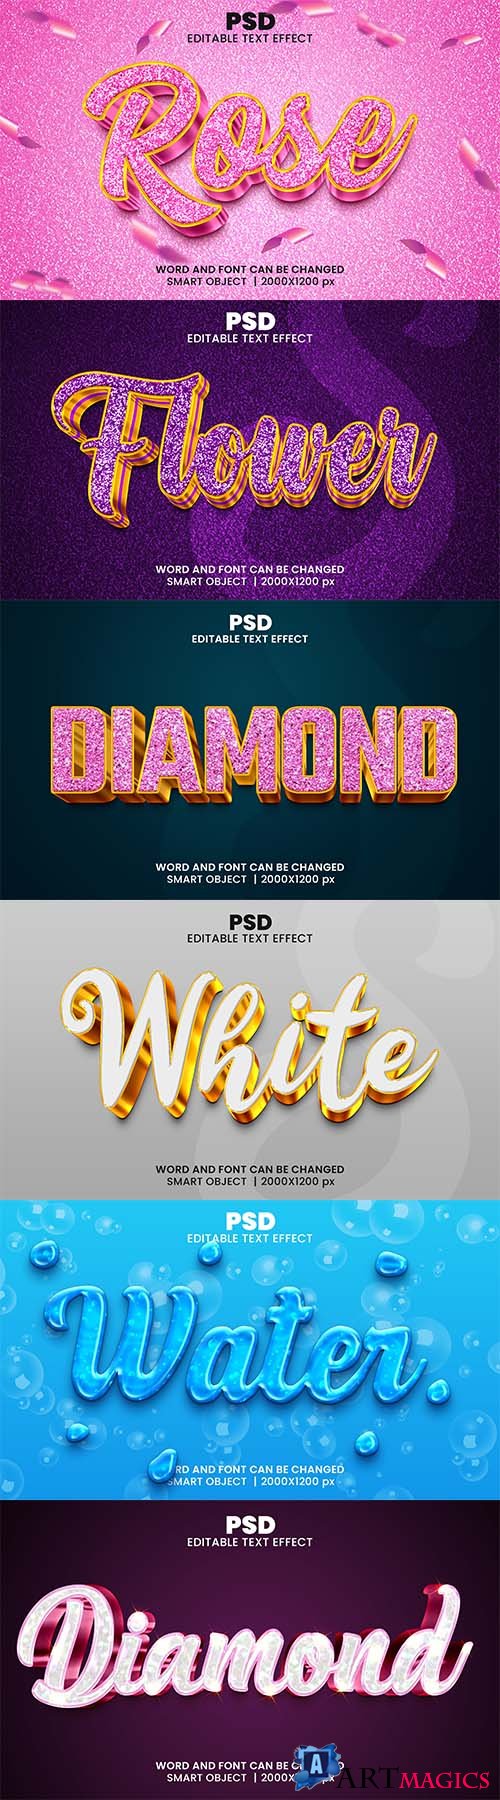 Psd style text effect editable set vol 6